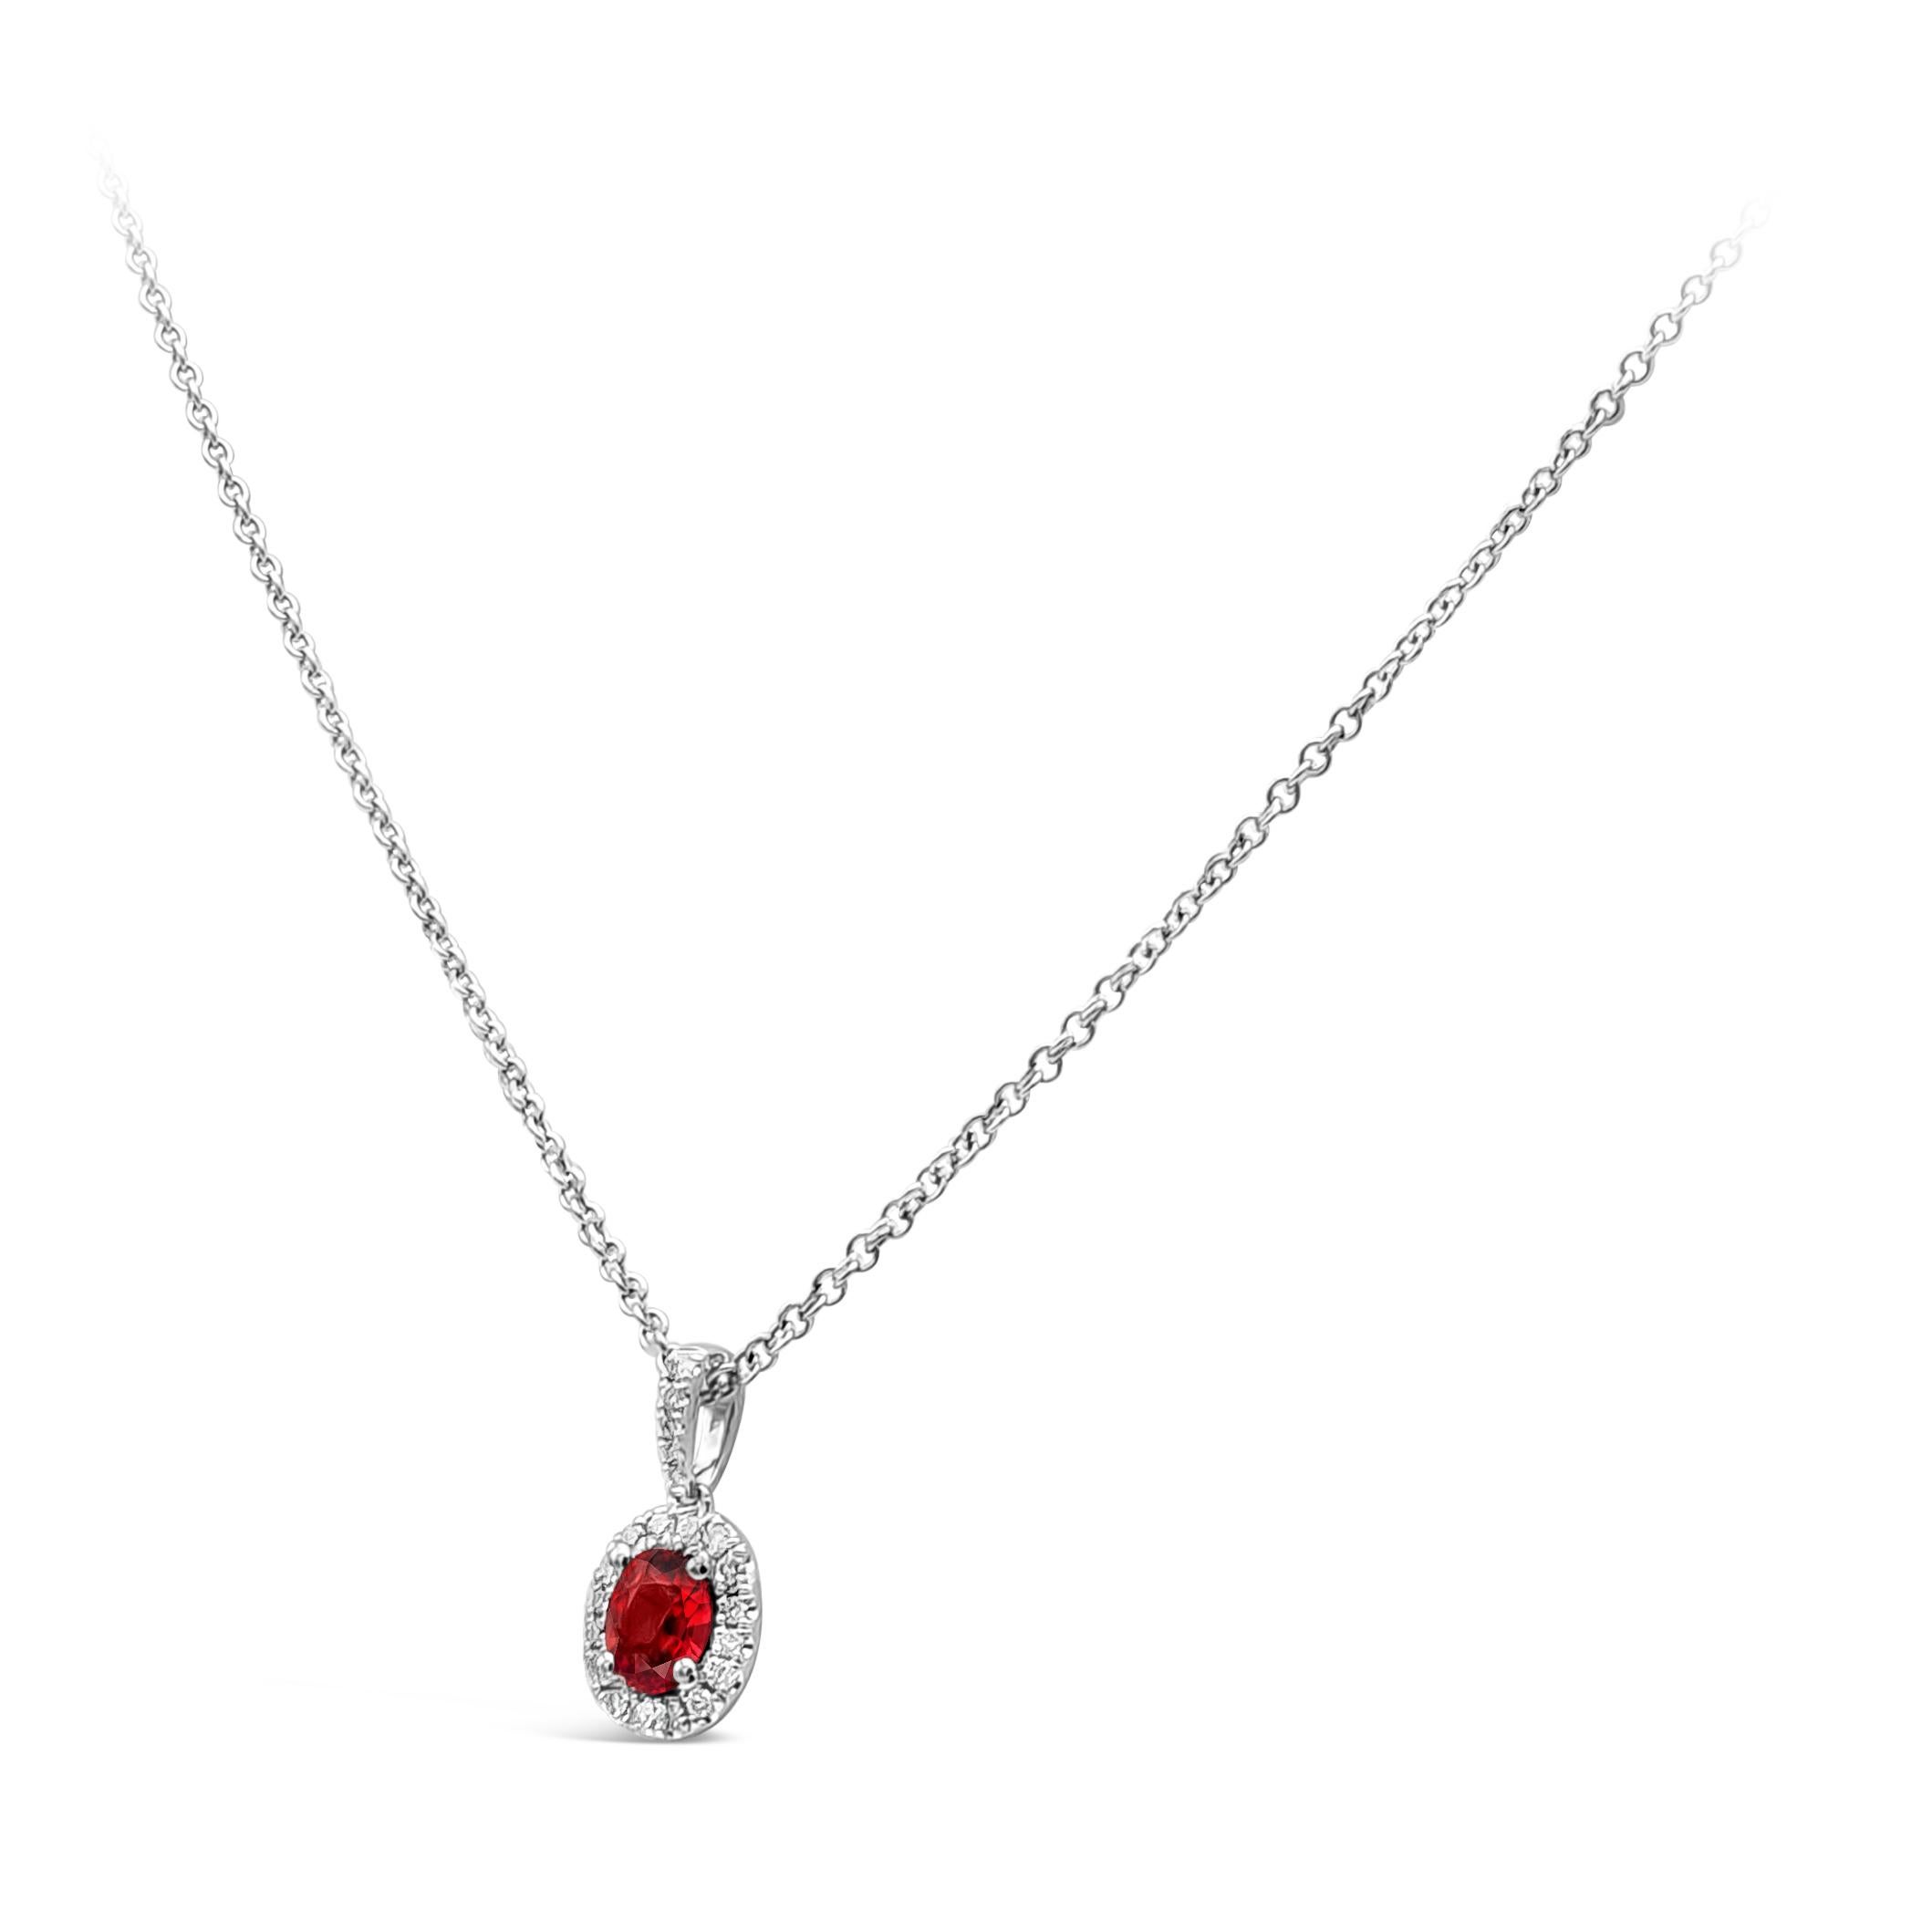 Contemporary Roman Malakov 0.38 Carat Oval Cut Ruby and Diamond Halo Pendant Necklace